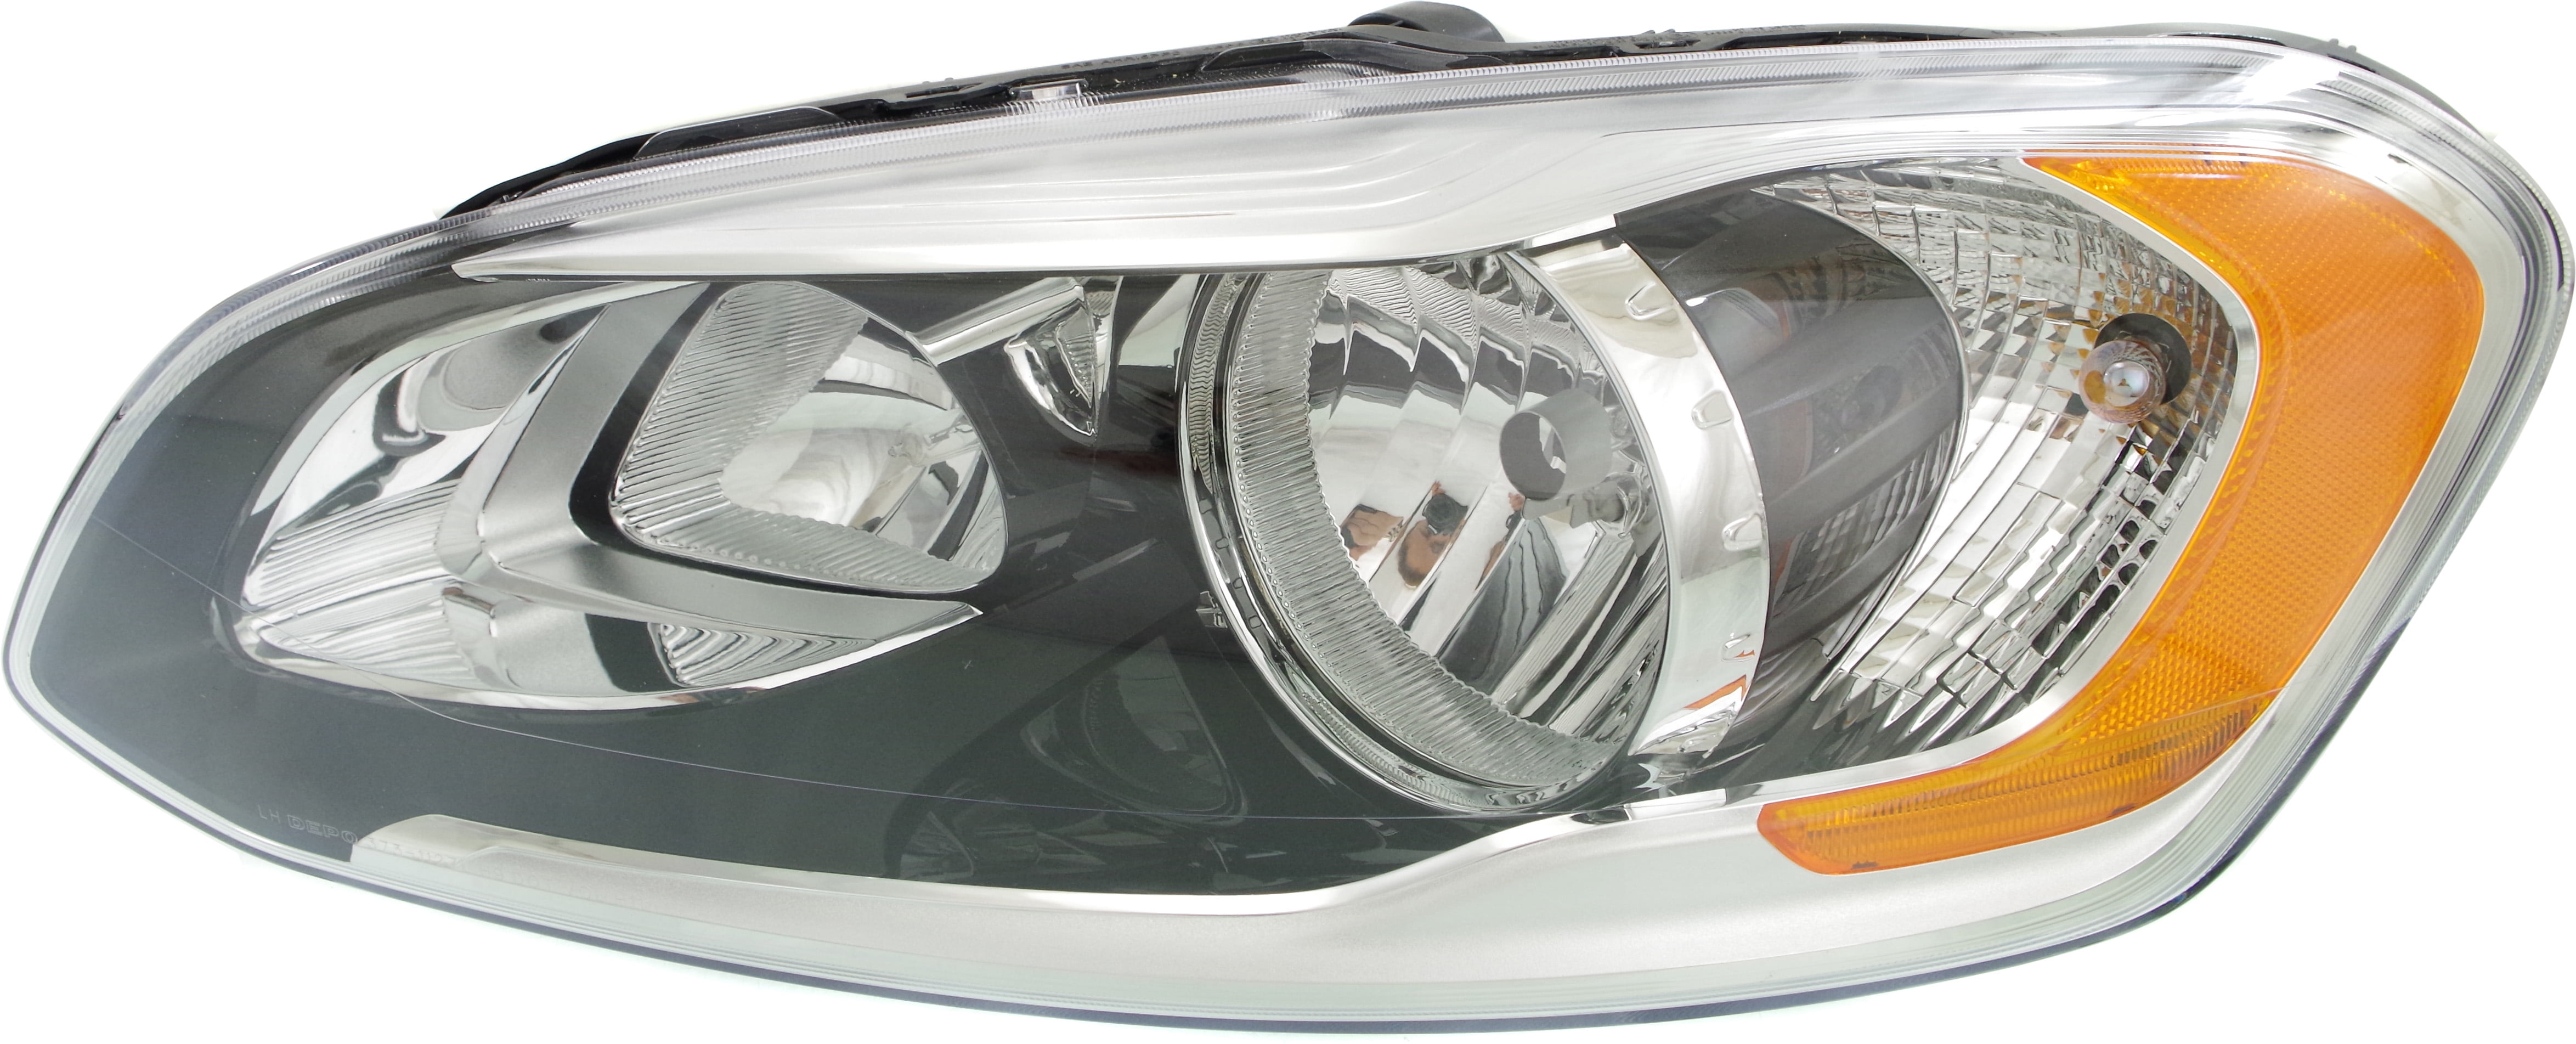 Volvo Xc70 Headlight Assembly